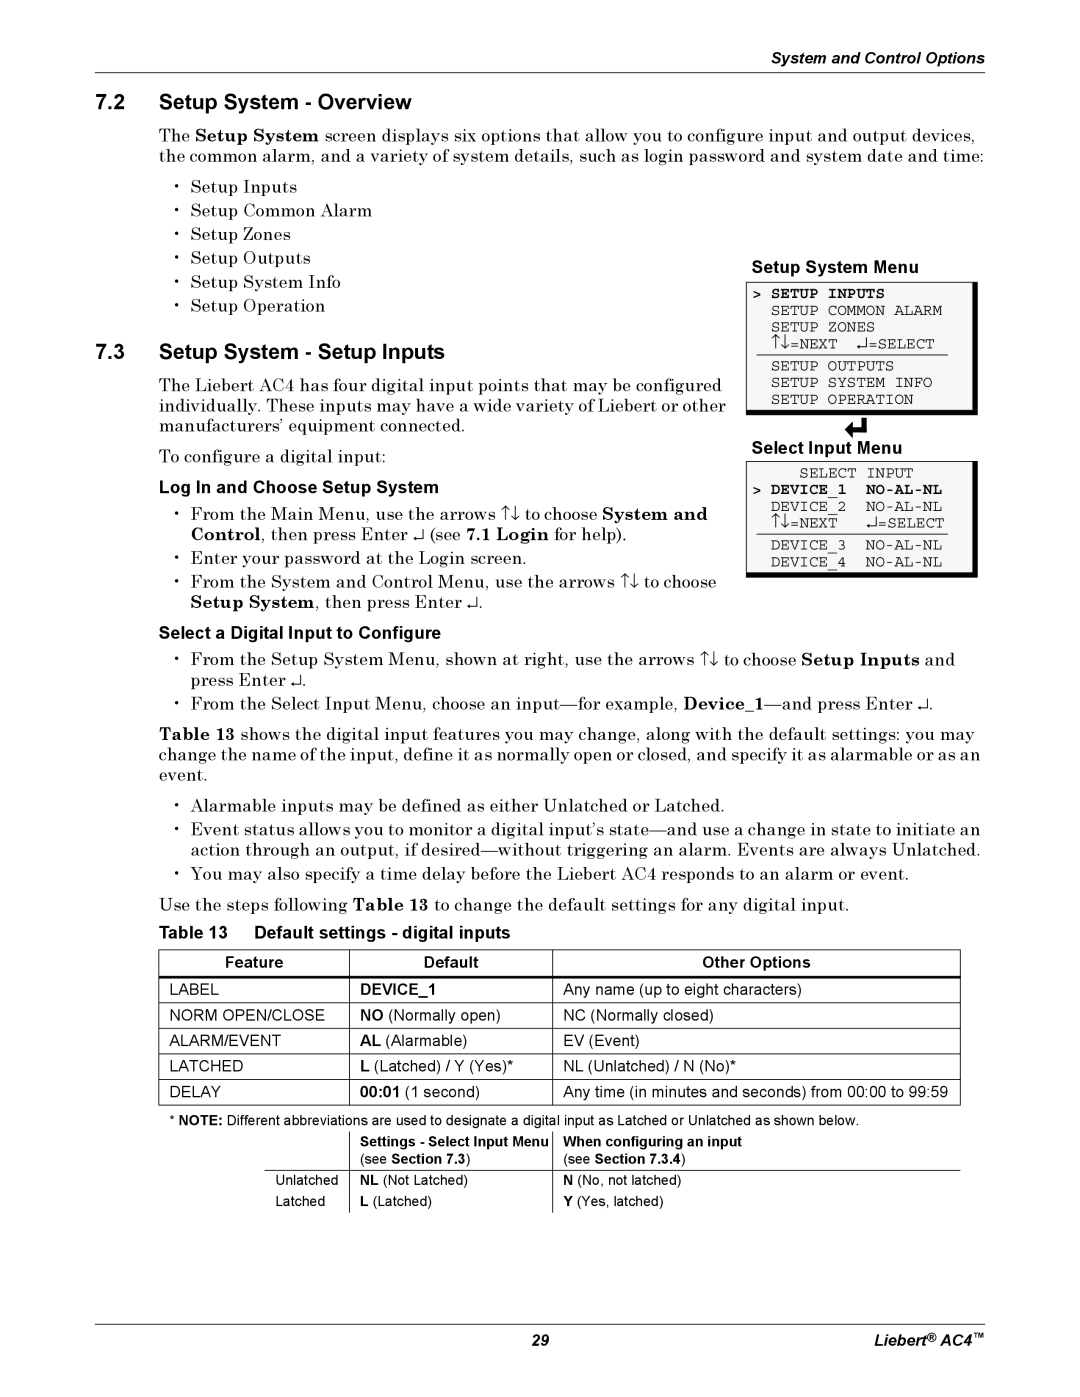 Emerson AC4 user manual 7.2Setup System - Overview, Setup System - Setup Inputs, Setup System Menu, Select Input Menu 